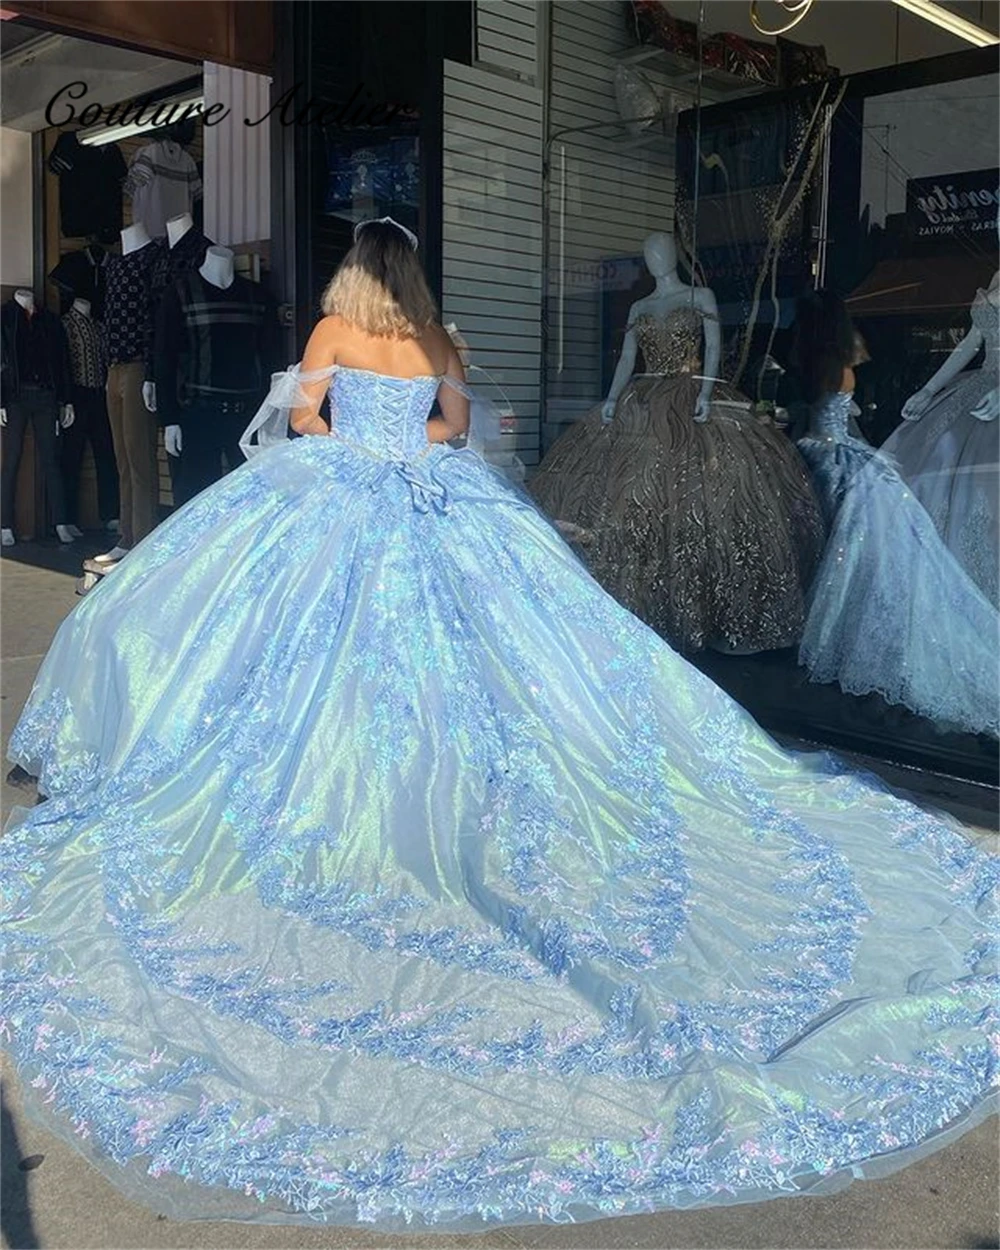 Купи Sparkly Light Blue Quinceanera Dresses Ball Gown Party Dress Lace Up Princess Dress Sweet 15 Dress cinderella dress quinceañera за 12,900 рублей в магазине AliExpress